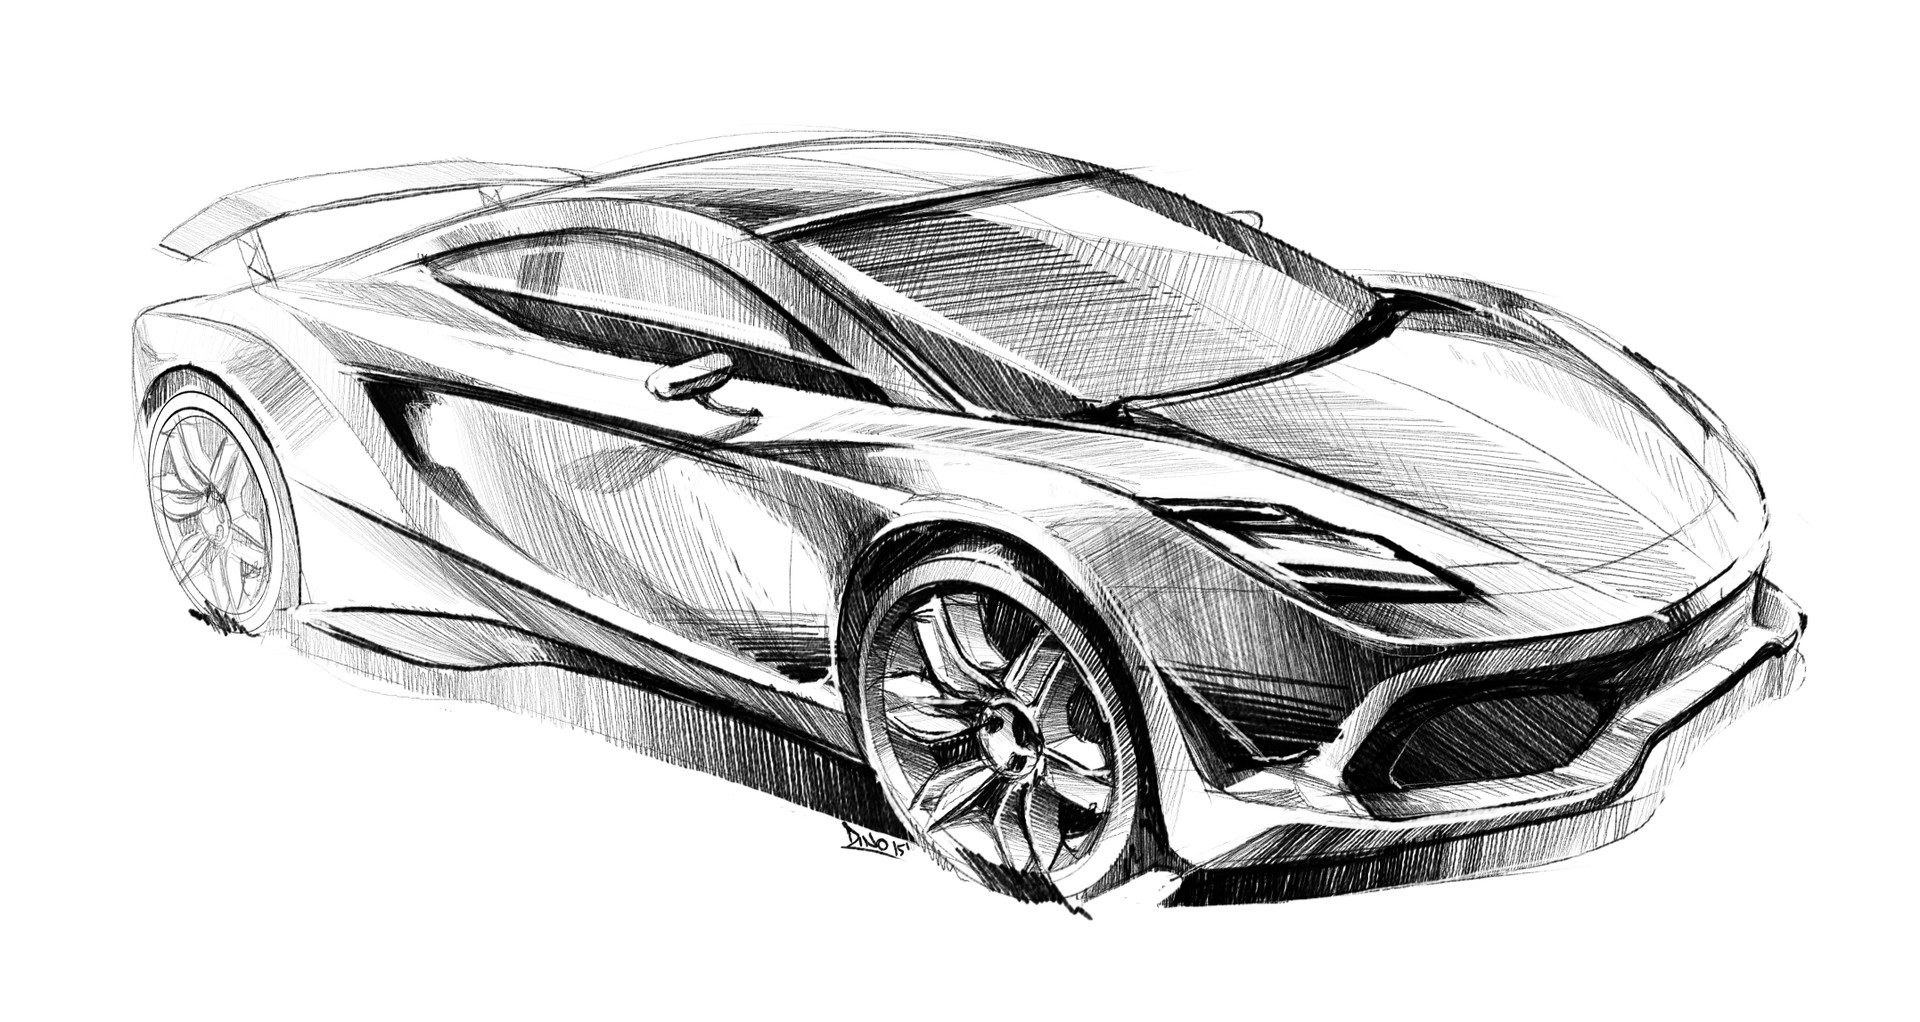 How to draw a car. Professional Car Design: Sketching CUV | Sketch design,  Sketch painting, Car design